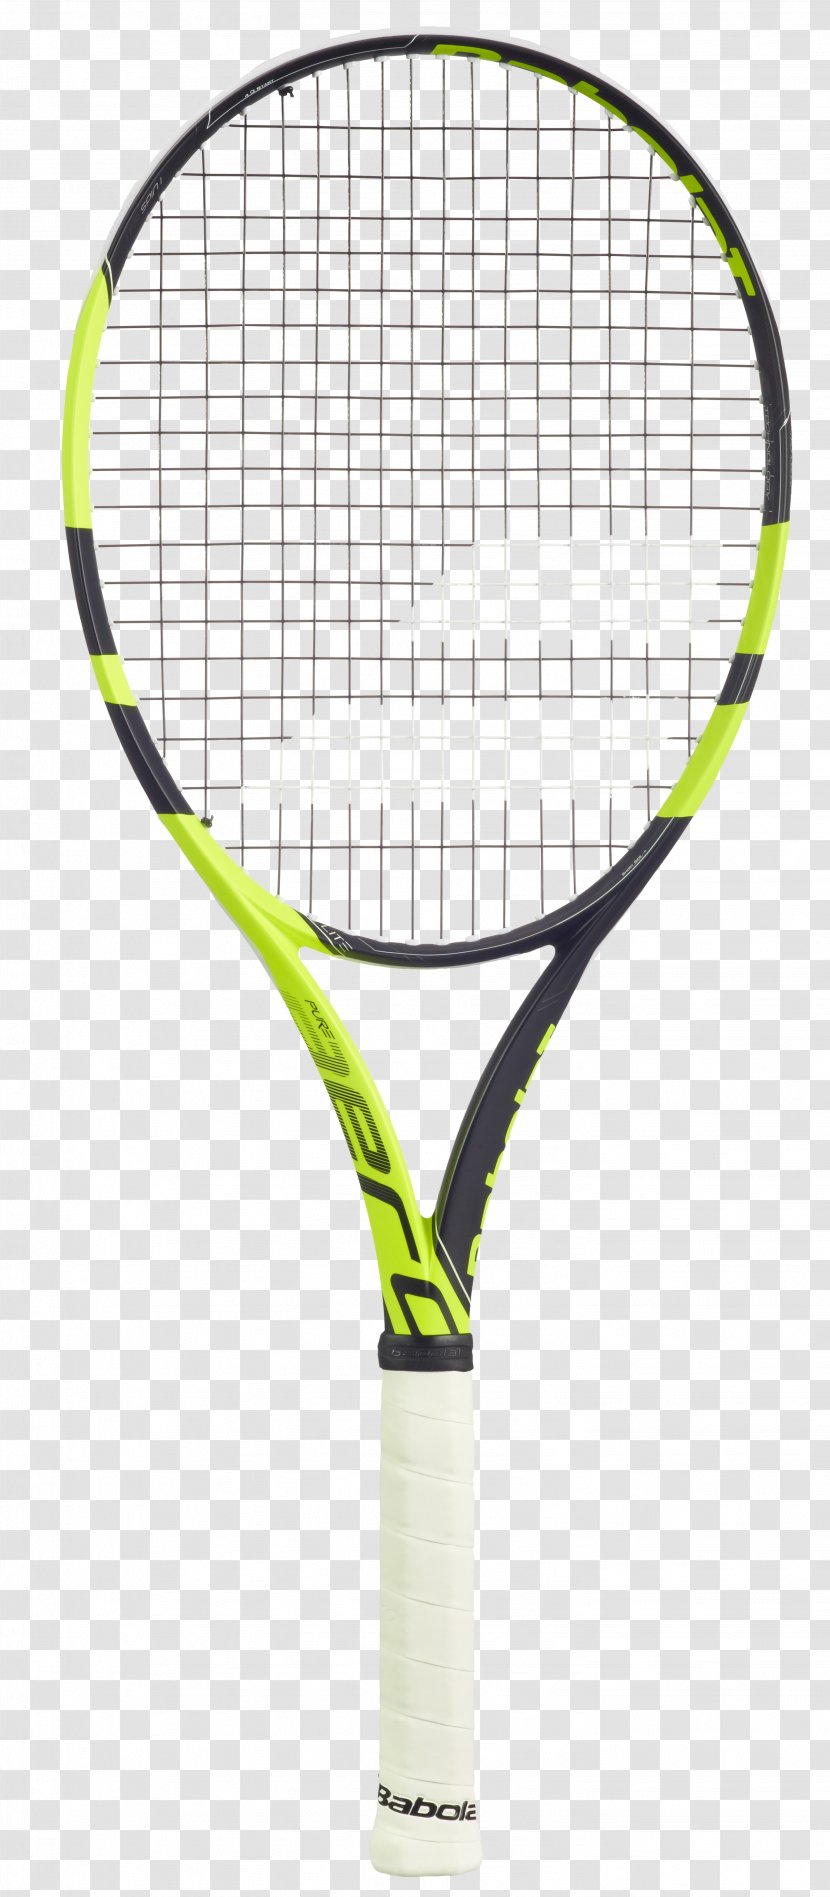 French Open Babolat Racket Tennis Rakieta Tenisowa - Yonex - Balance Transparent PNG